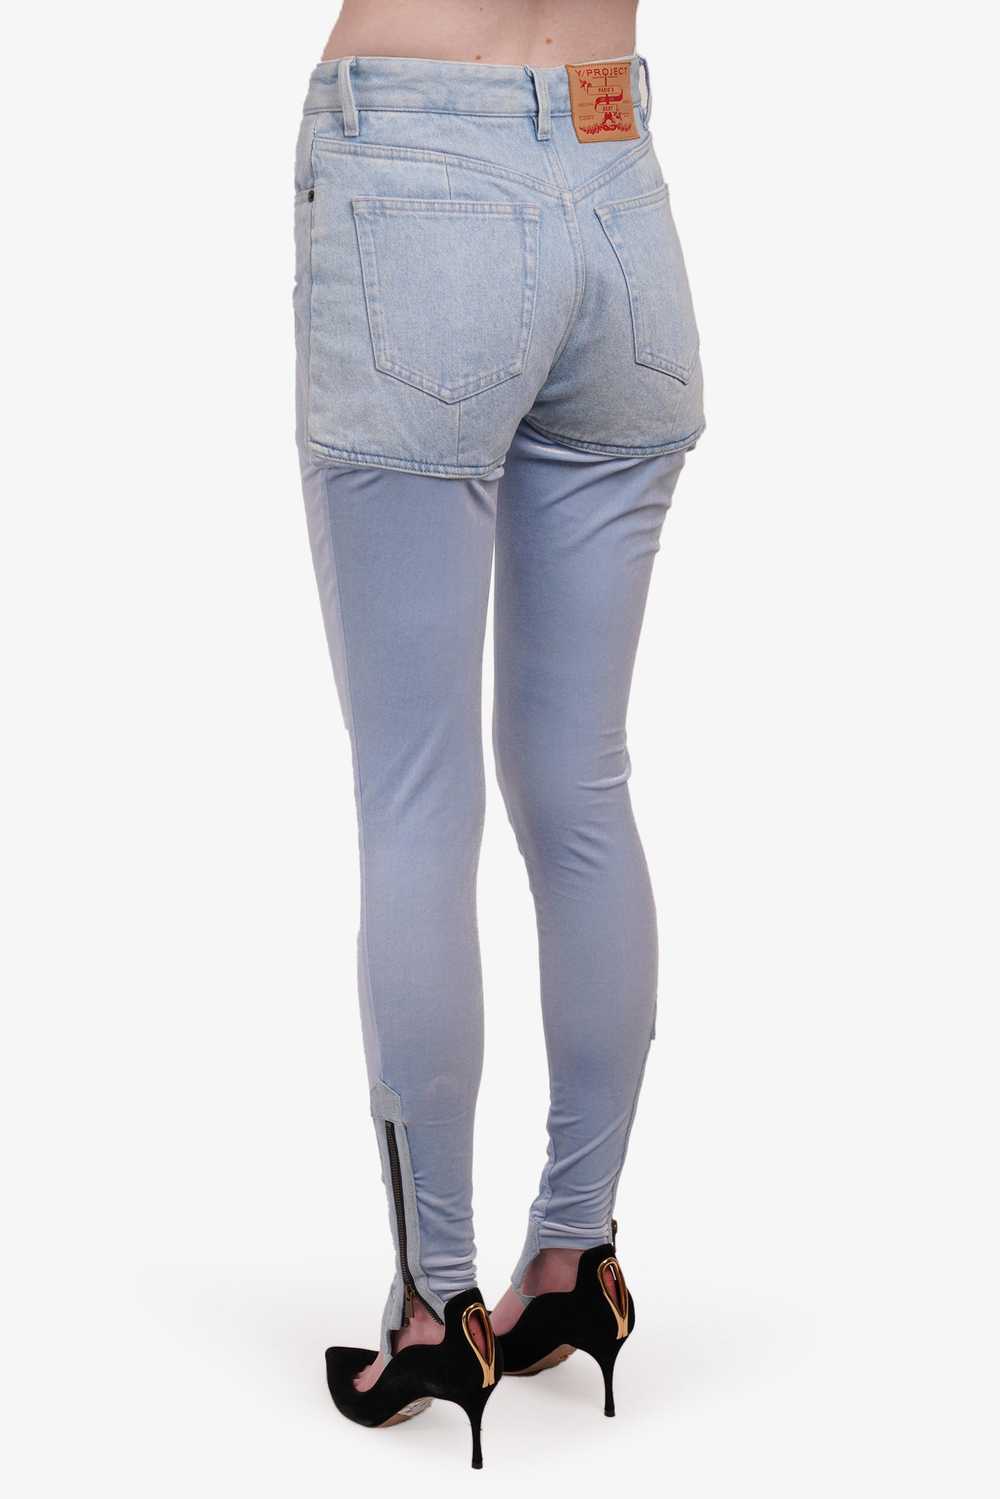 Y Project Blue Denim/Velvet Stirrup Pants Size S - image 3